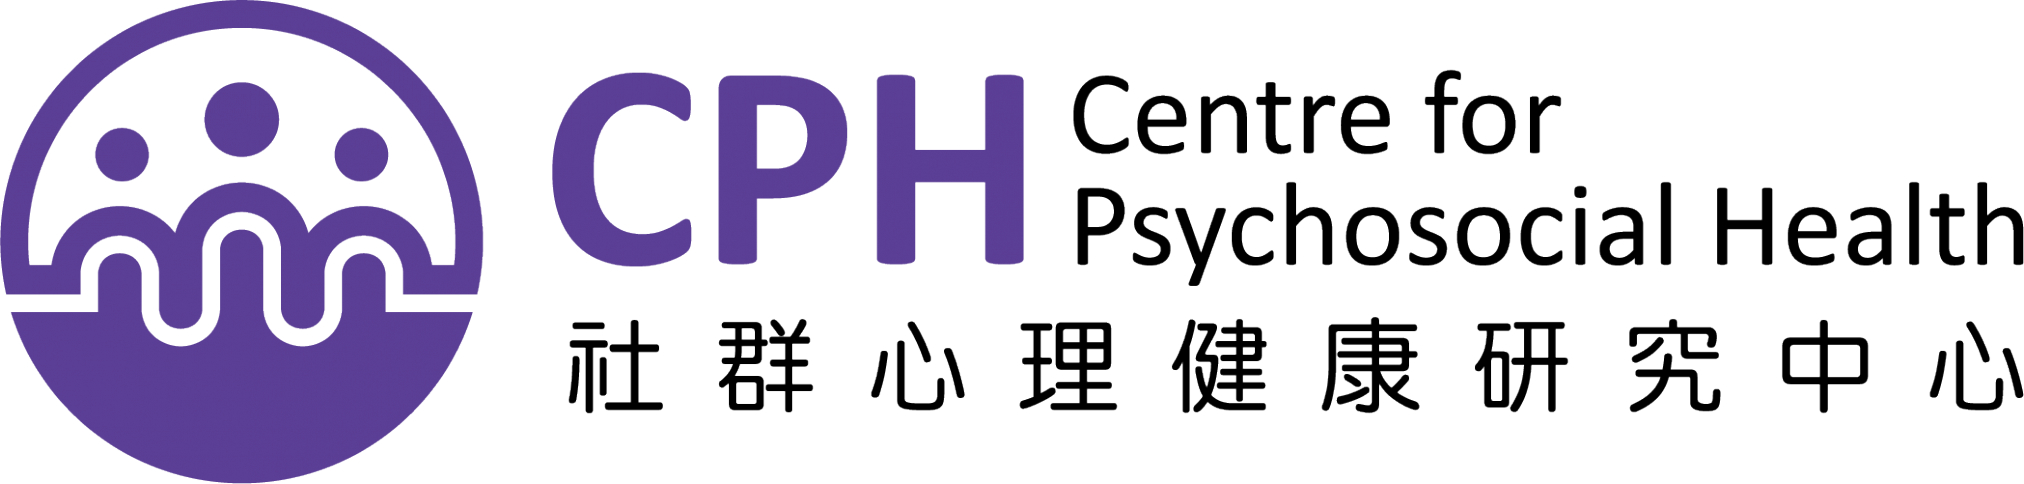 Centre for Psychosocial Health